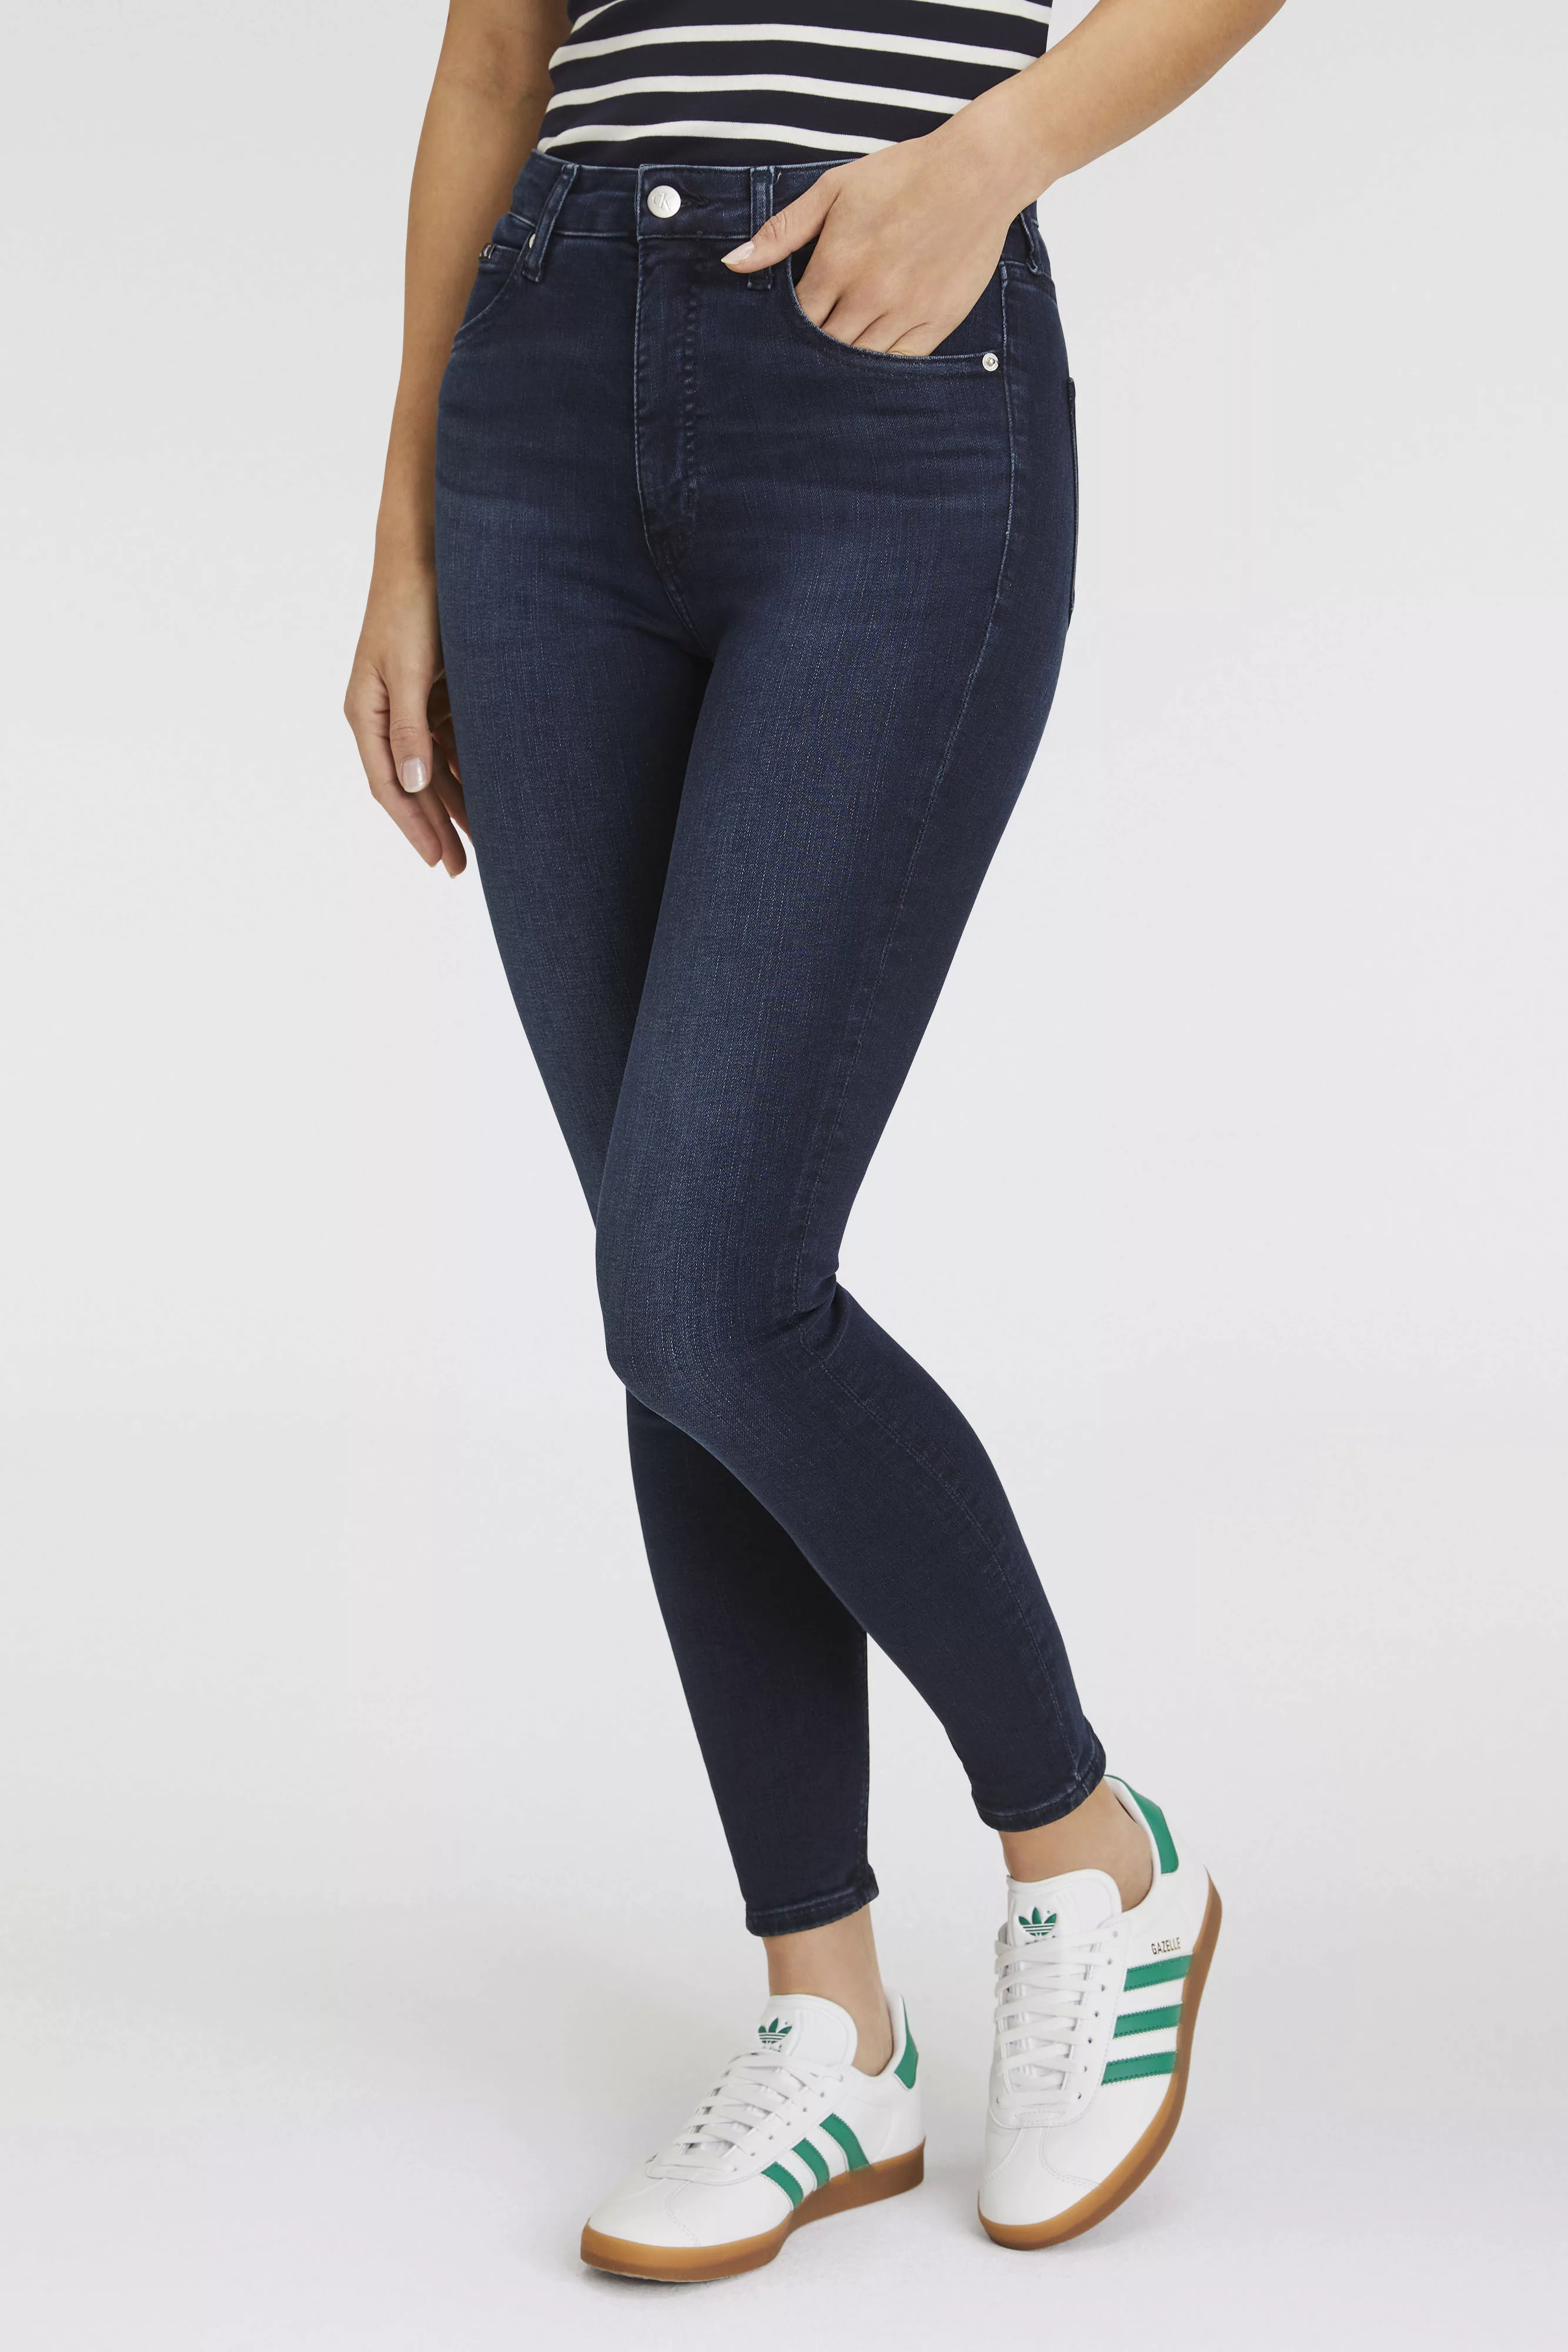 Calvin Klein Jeans Skinny-fit-Jeans "HIGH RISE SUPER SKINNY ANKLE" günstig online kaufen